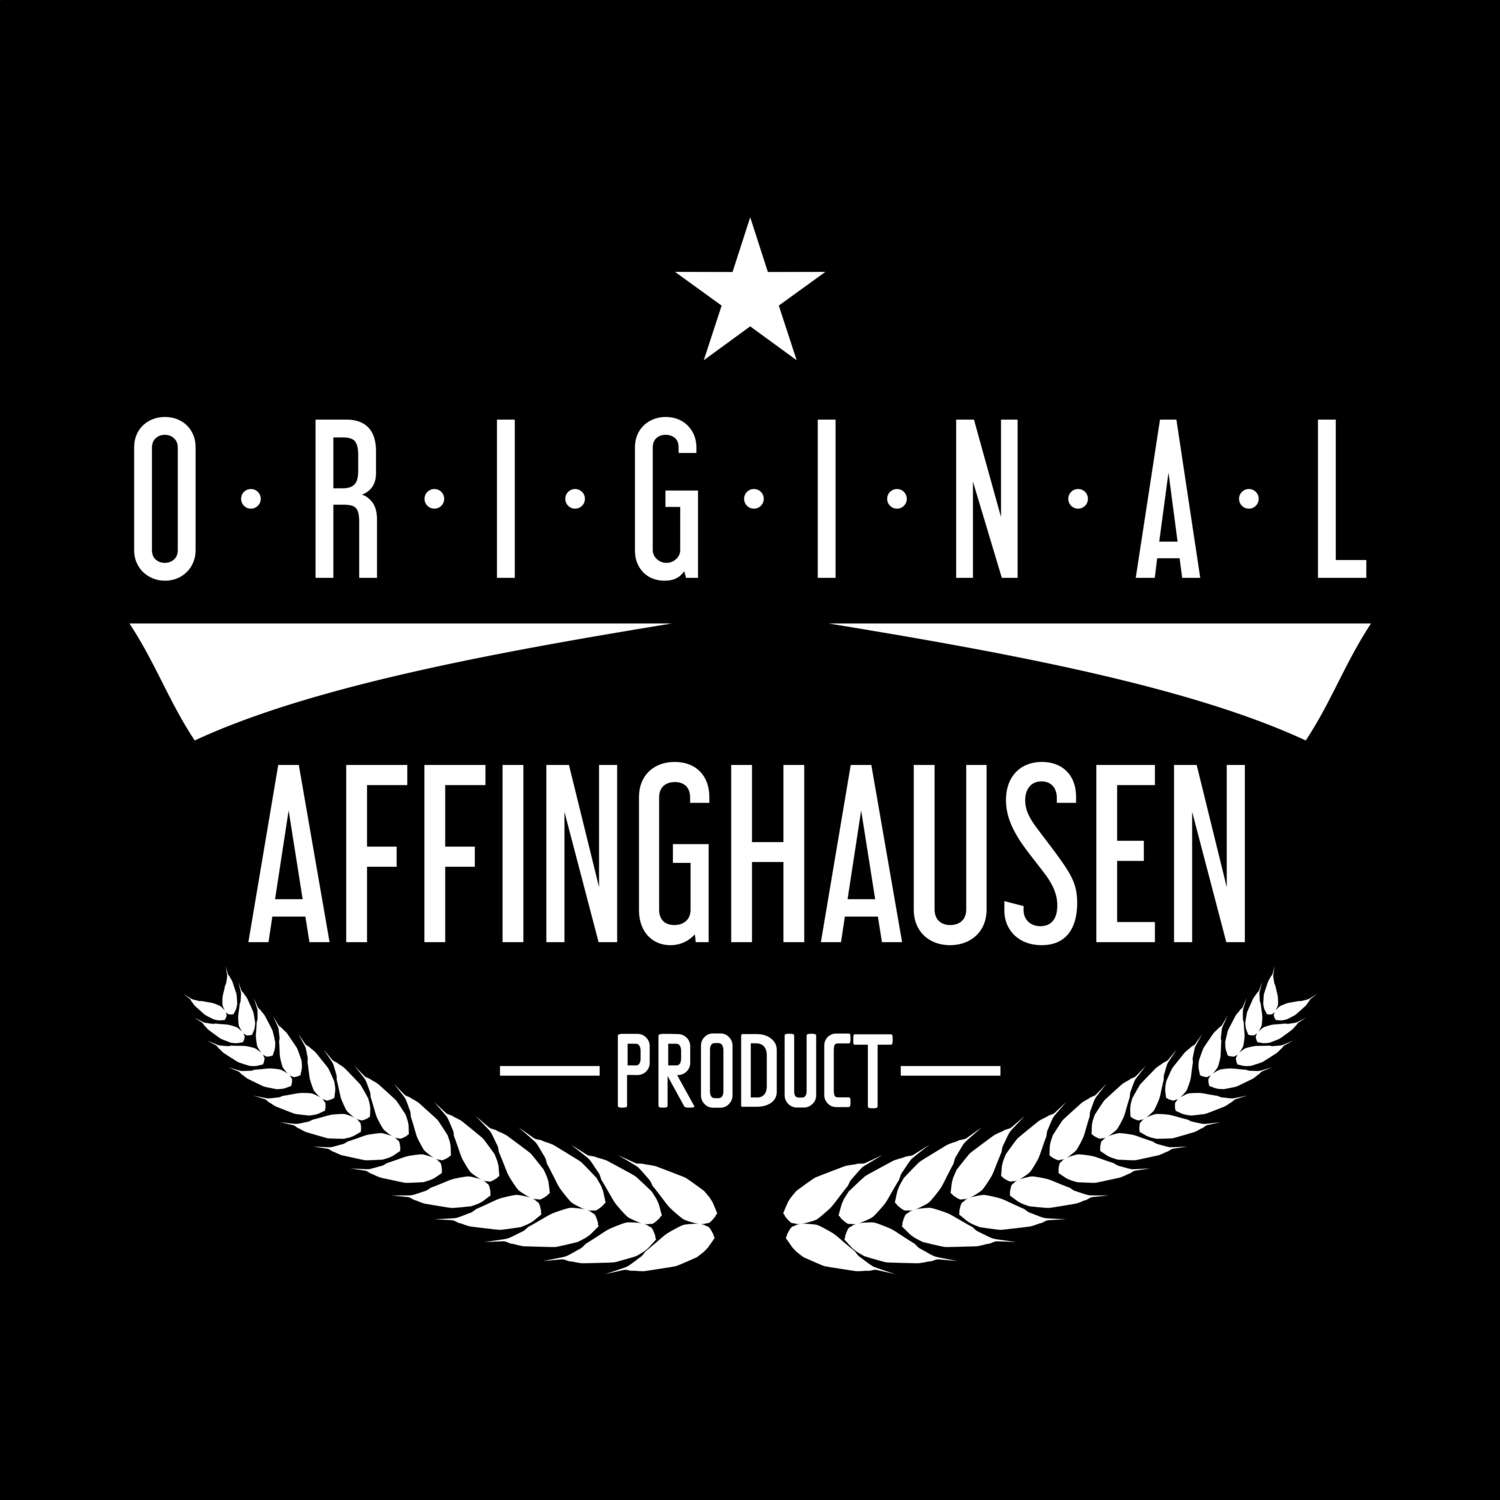 Affinghausen T-Shirt »Original Product«